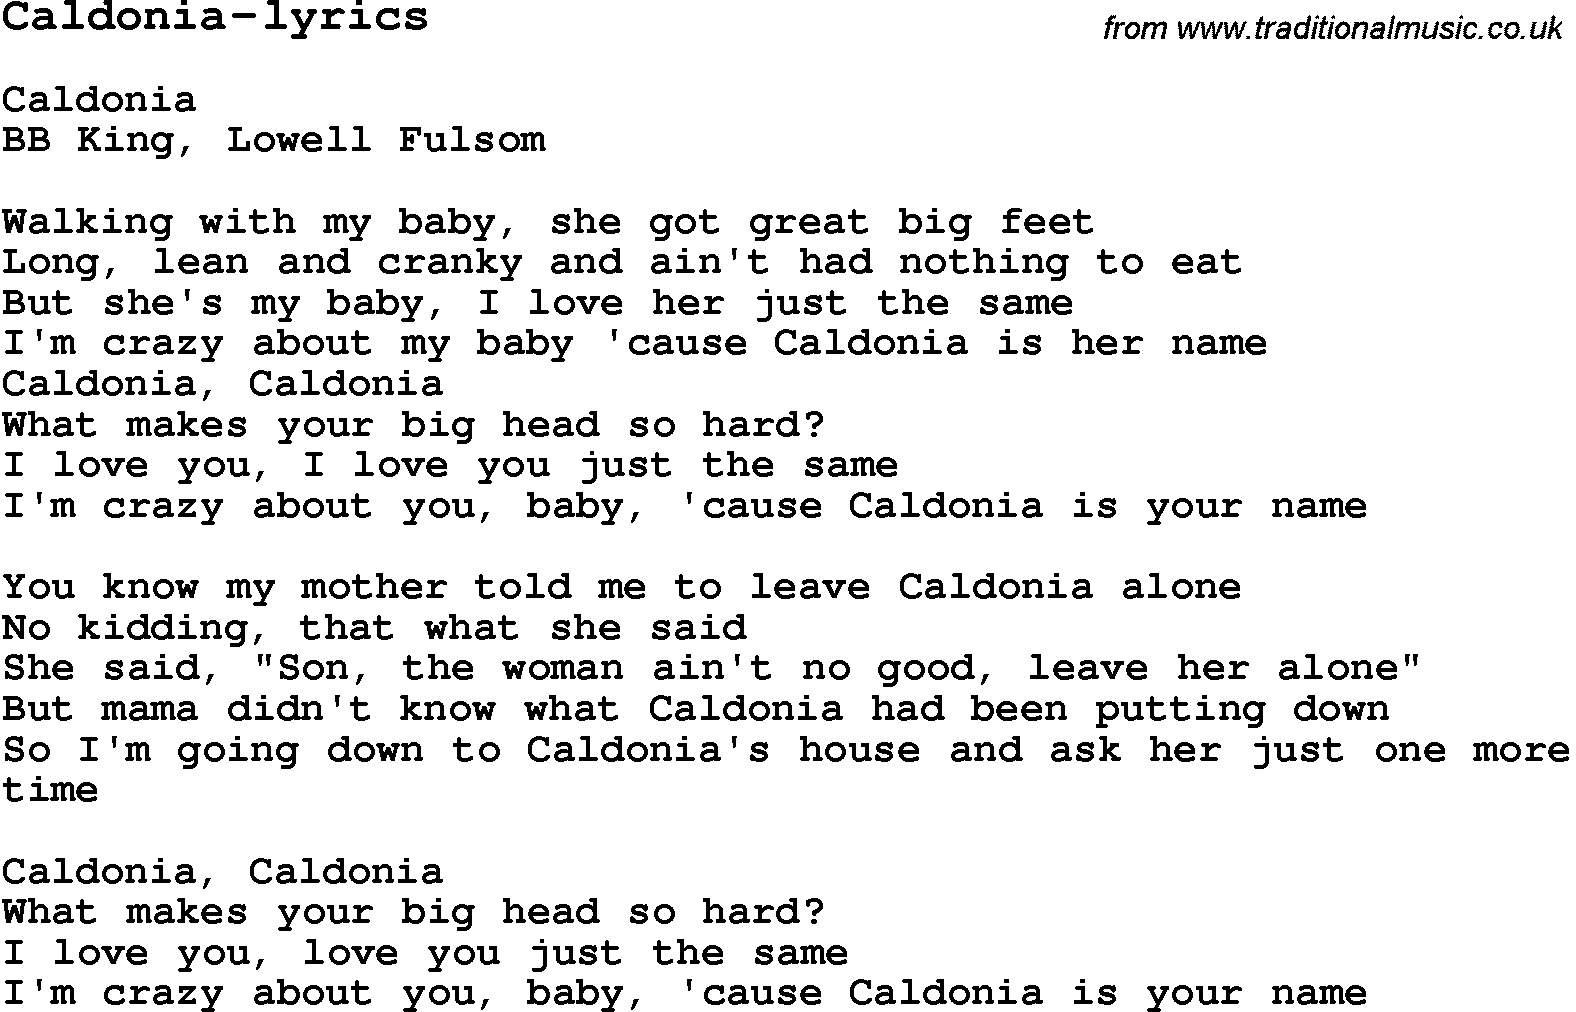 Blues Guitar Song, lyrics, chords, tablature, playing hints for Caldonia-lyrics